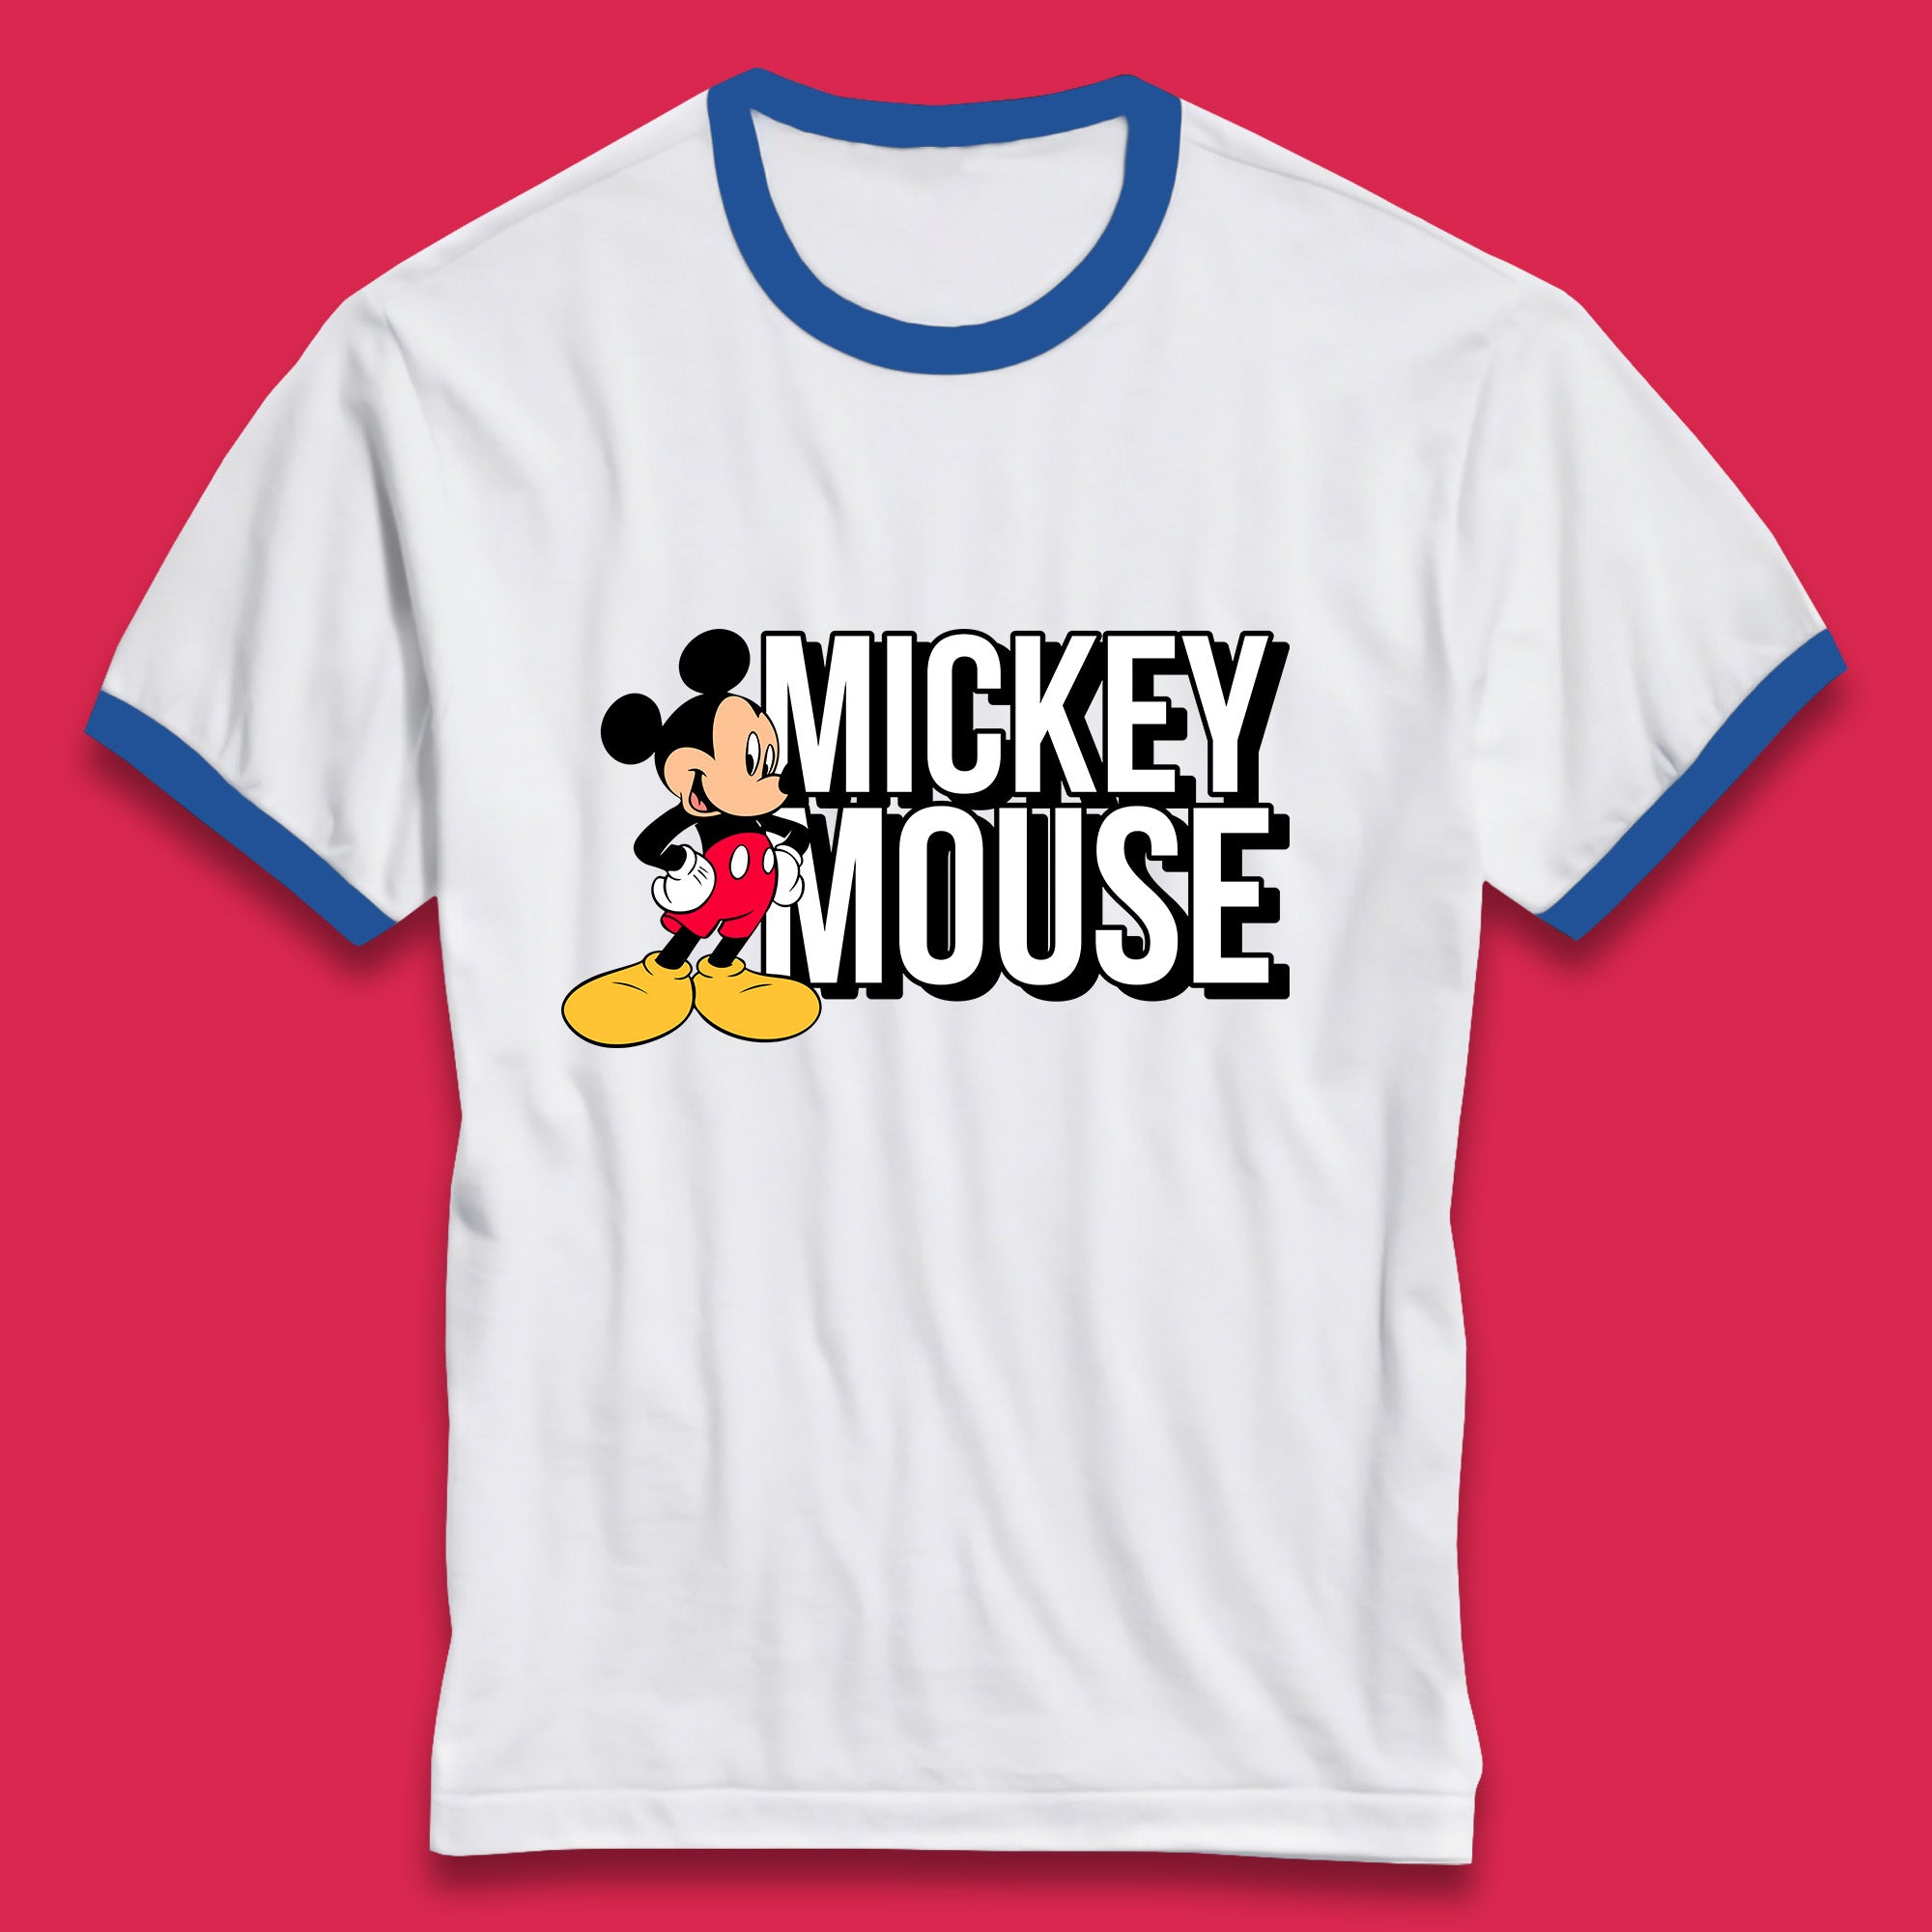 Disney Mickey Mouse Cartoon Character Disneyland Walt Disney Vacation Trip Disney World Ringer T Shirt